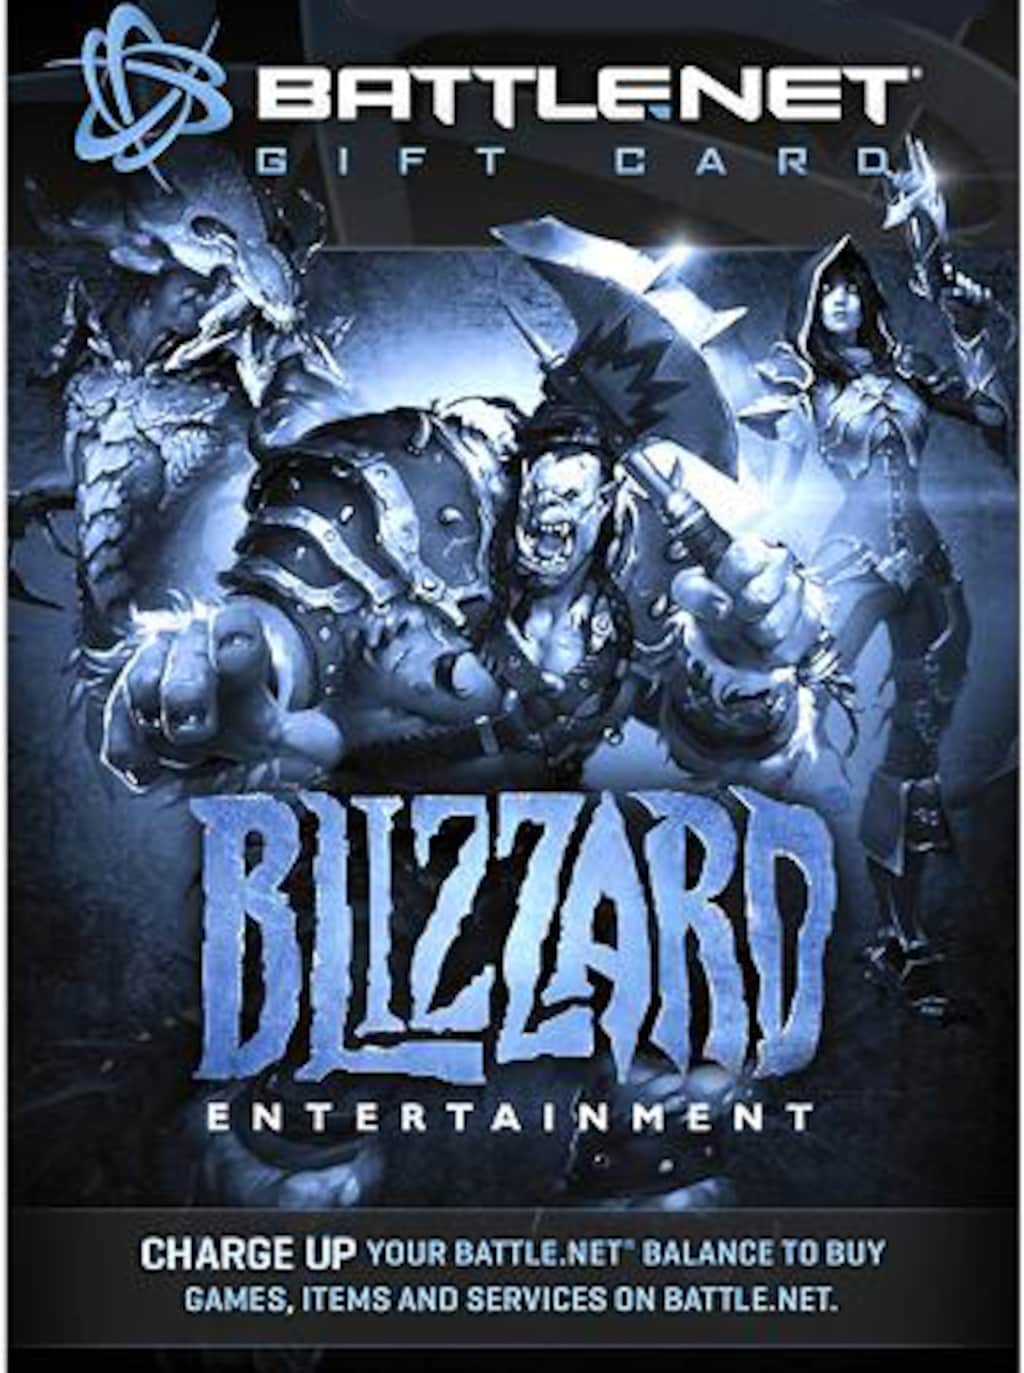 Games - UK - Blizzard Entertainment, Battlenet gift card 15 pounds, unused